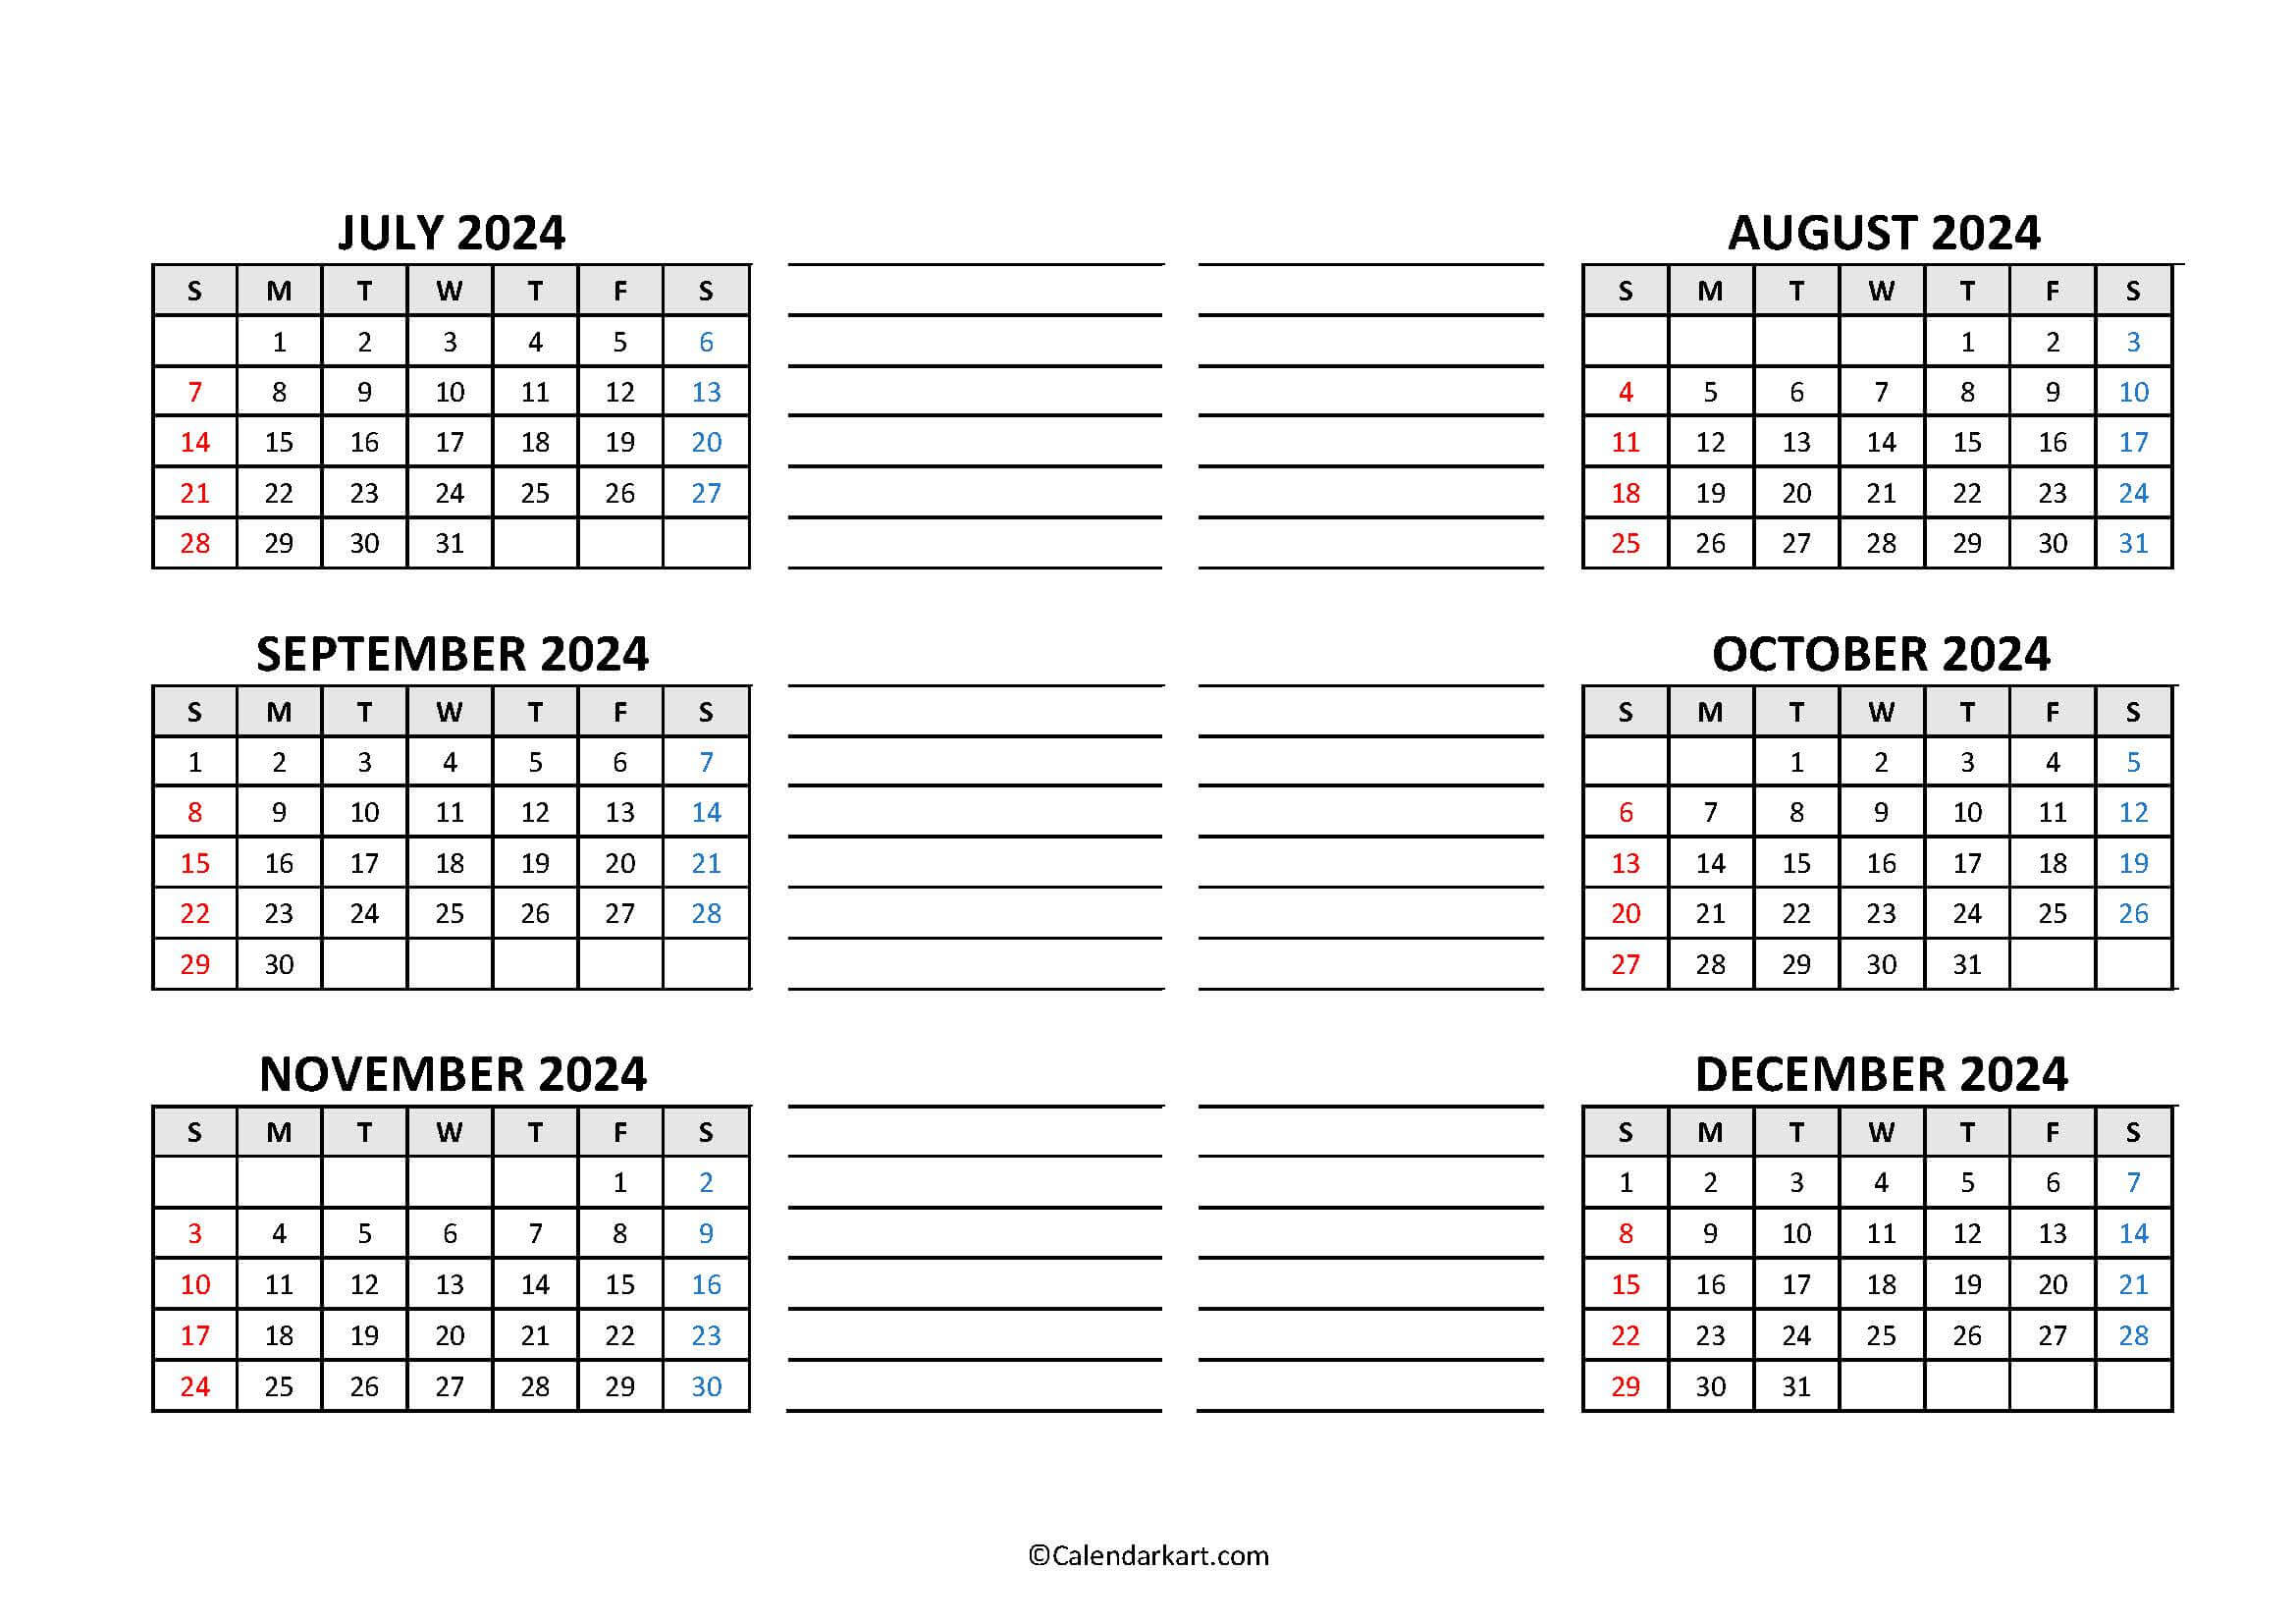 Free Printable Year At A Glance Calendar 2024 - Calendarkart | Calendar 2024